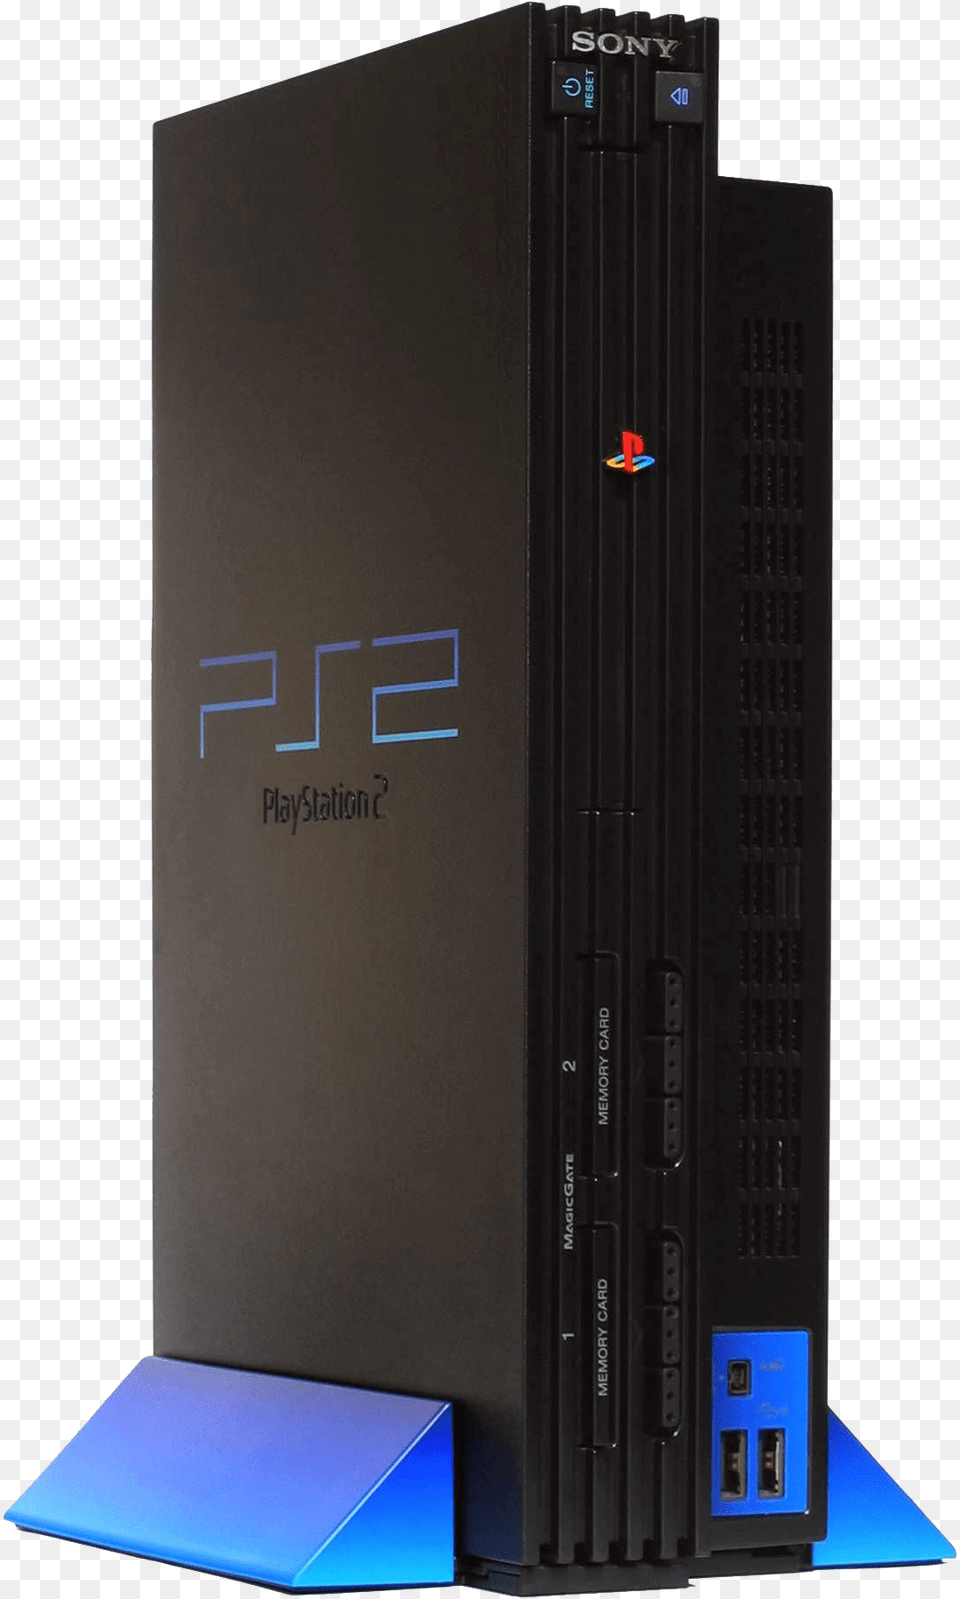 Playstation 2 Playstation 2 No Background, Electronics, Hardware, Computer, Computer Hardware Png